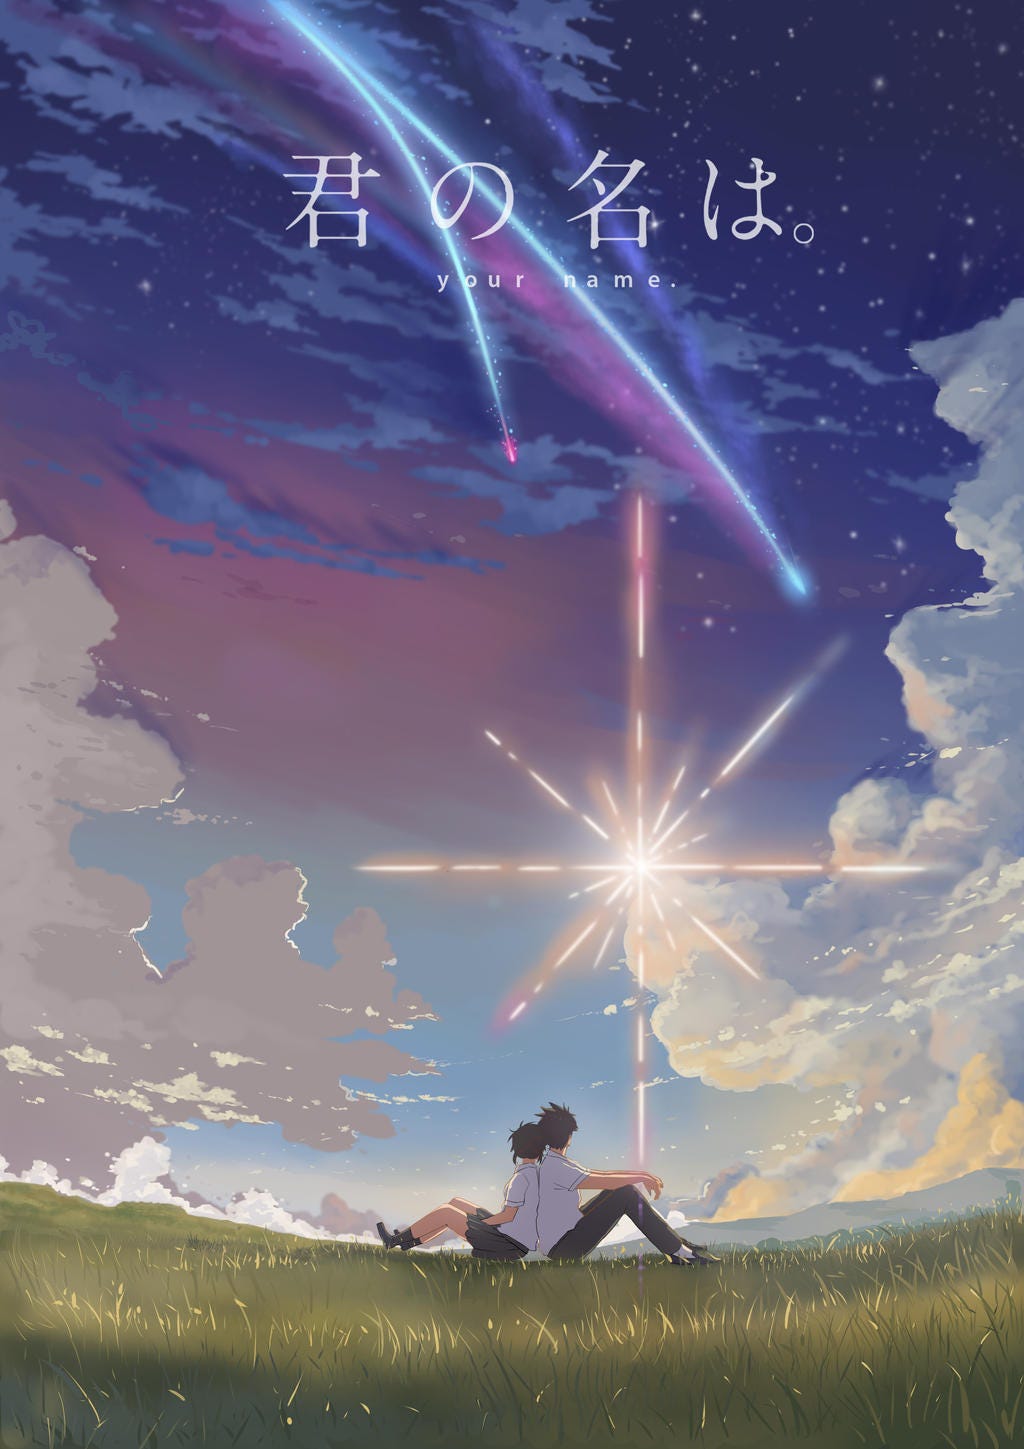 Your Name (Kimi no Na wa) Anime Review